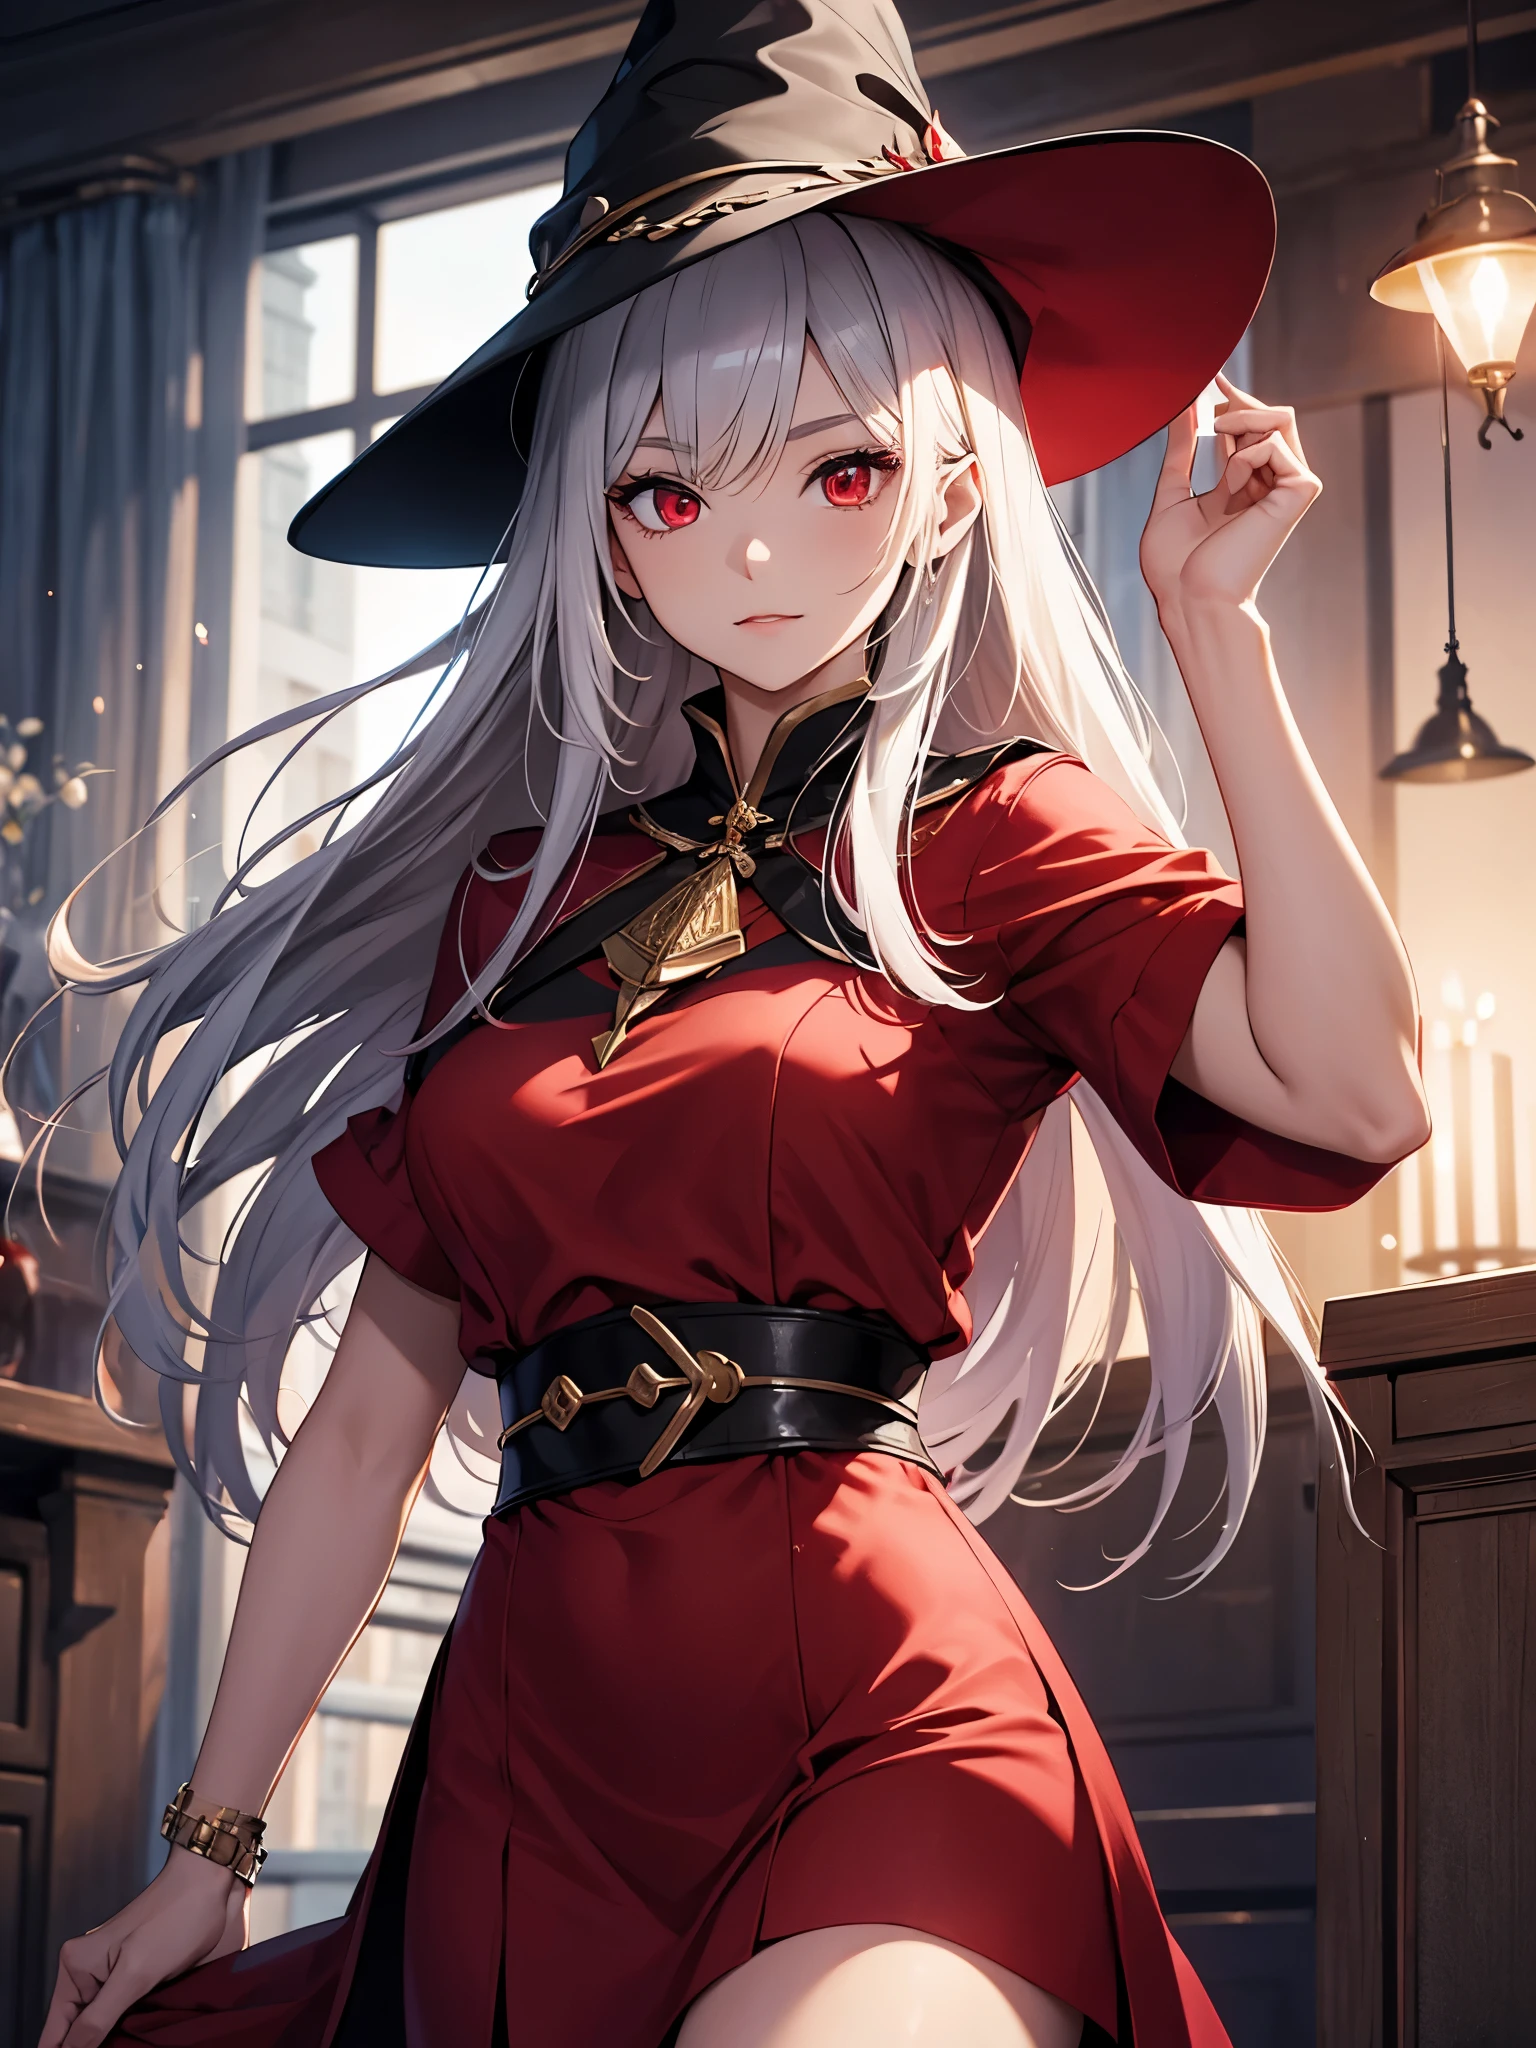 A mature girl, wear wizard hat, wear red dress, red eyes, light skin